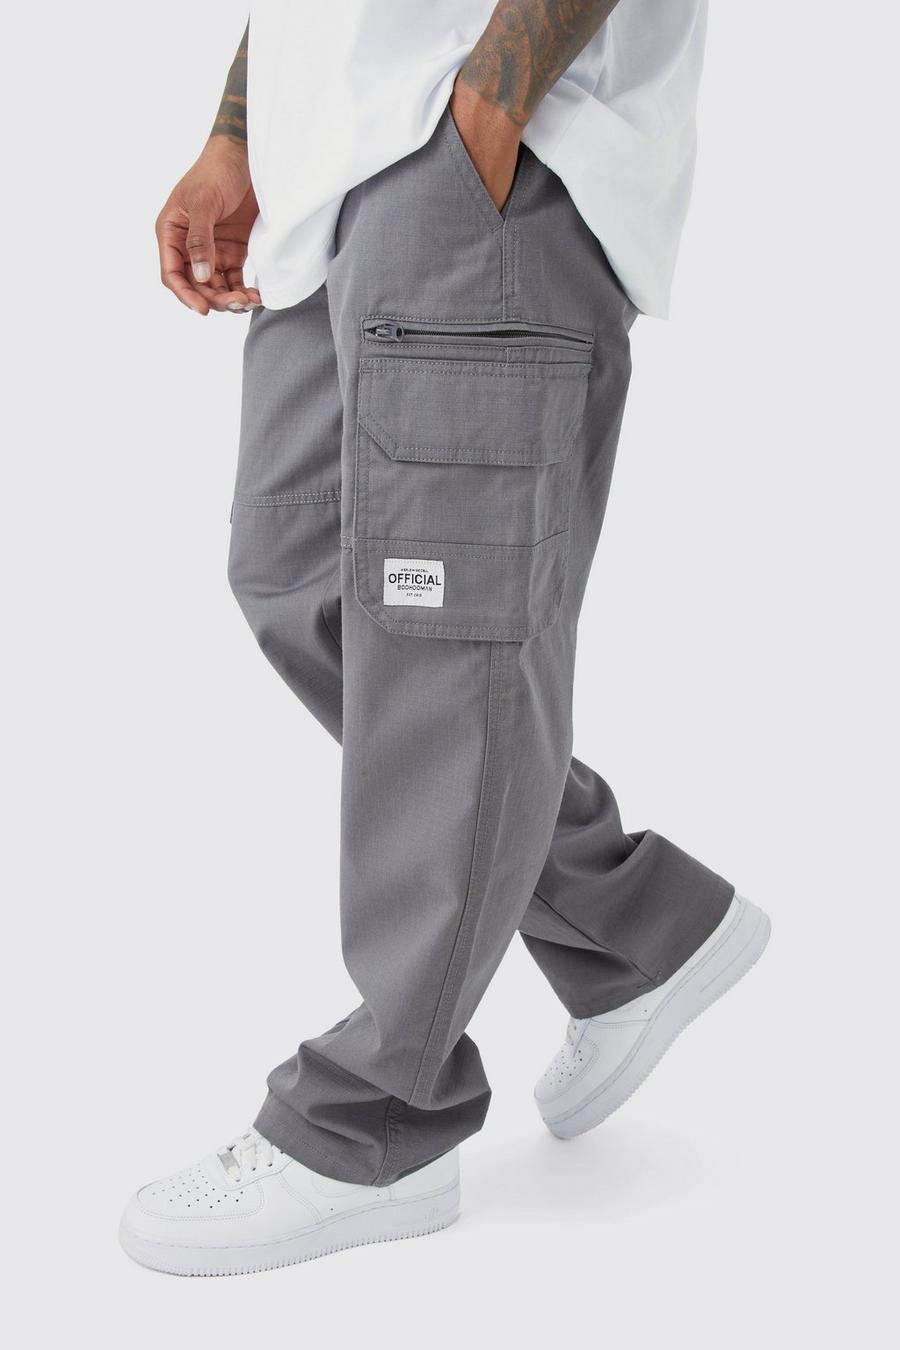 Pantalón cargo con costuras antidesgarros, cremallera y etiqueta de tela, Charcoal